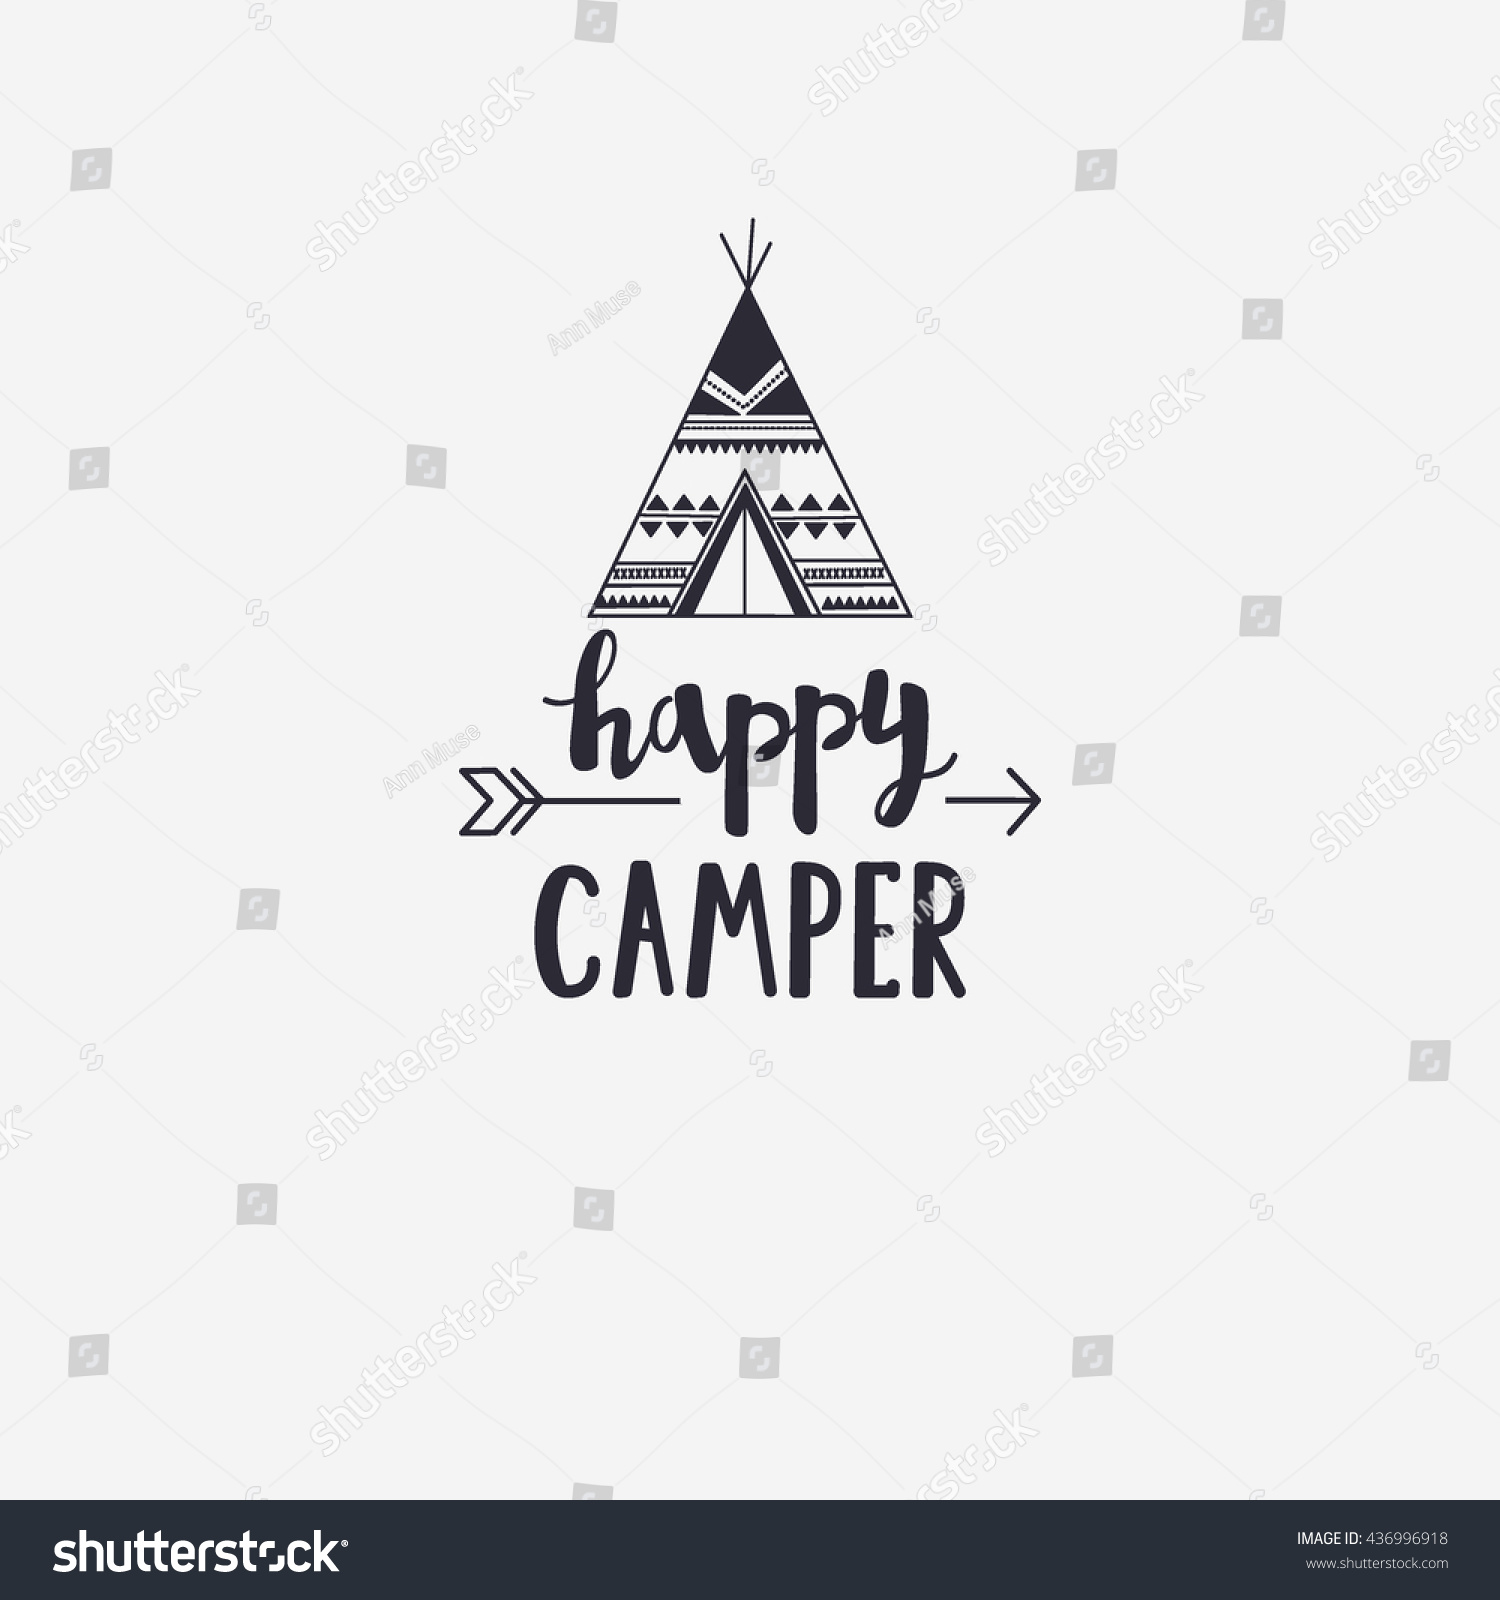 happy camper clipart - photo #47